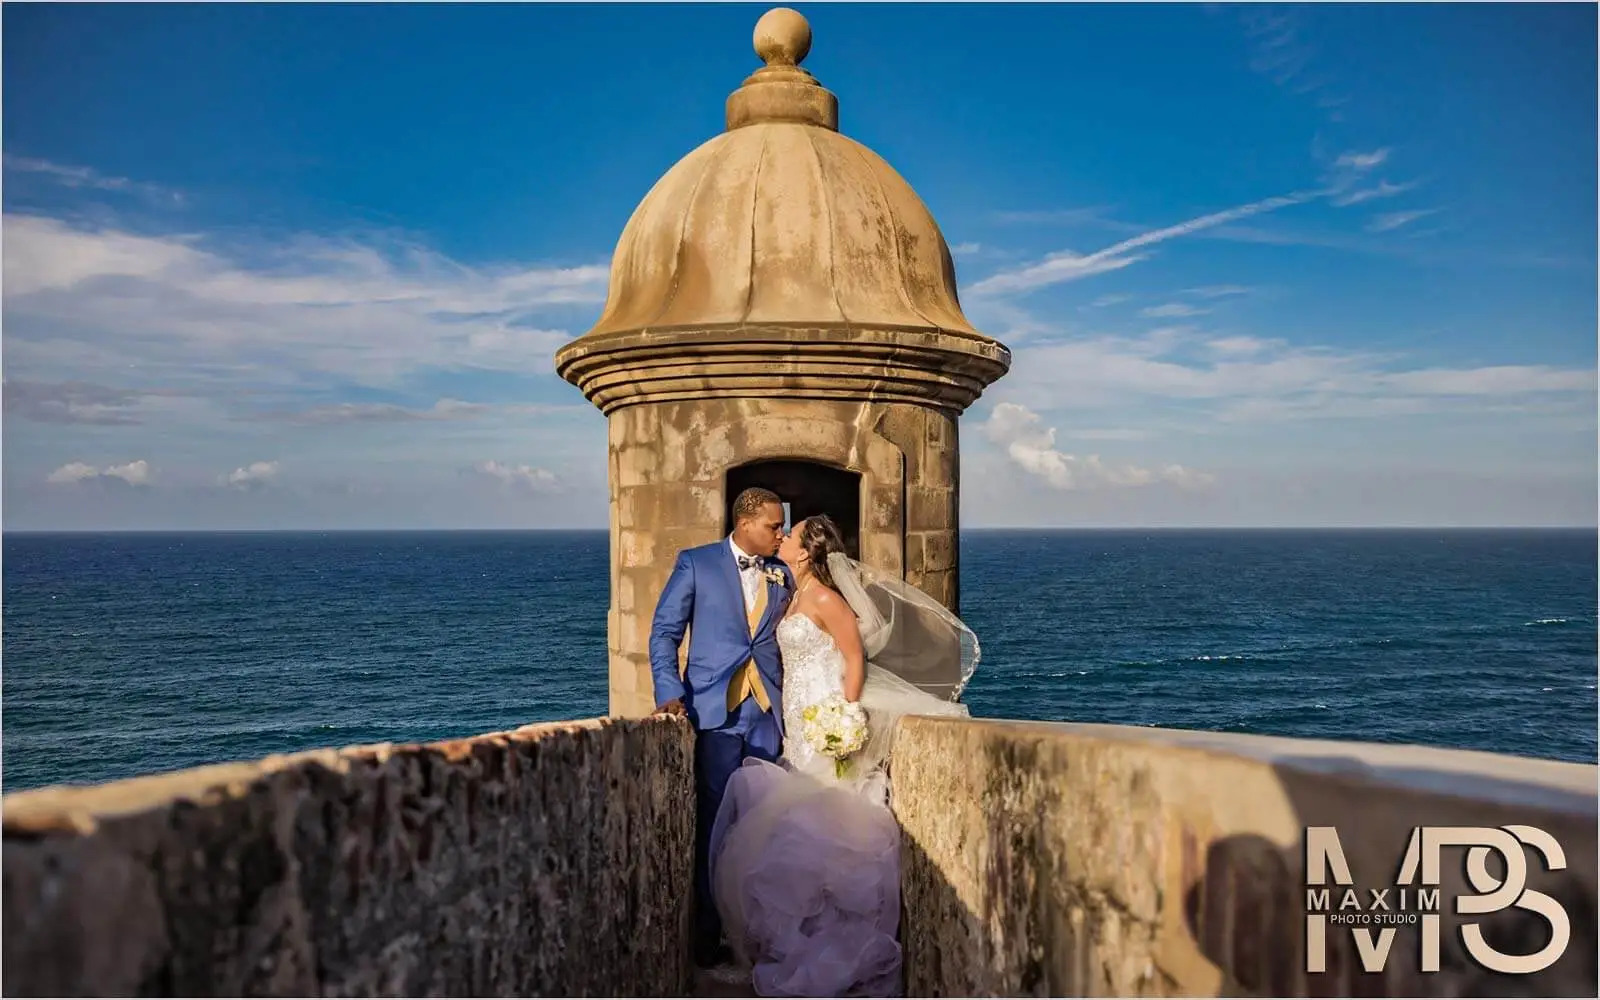 Puerto Rico Destination wedding photography 1600